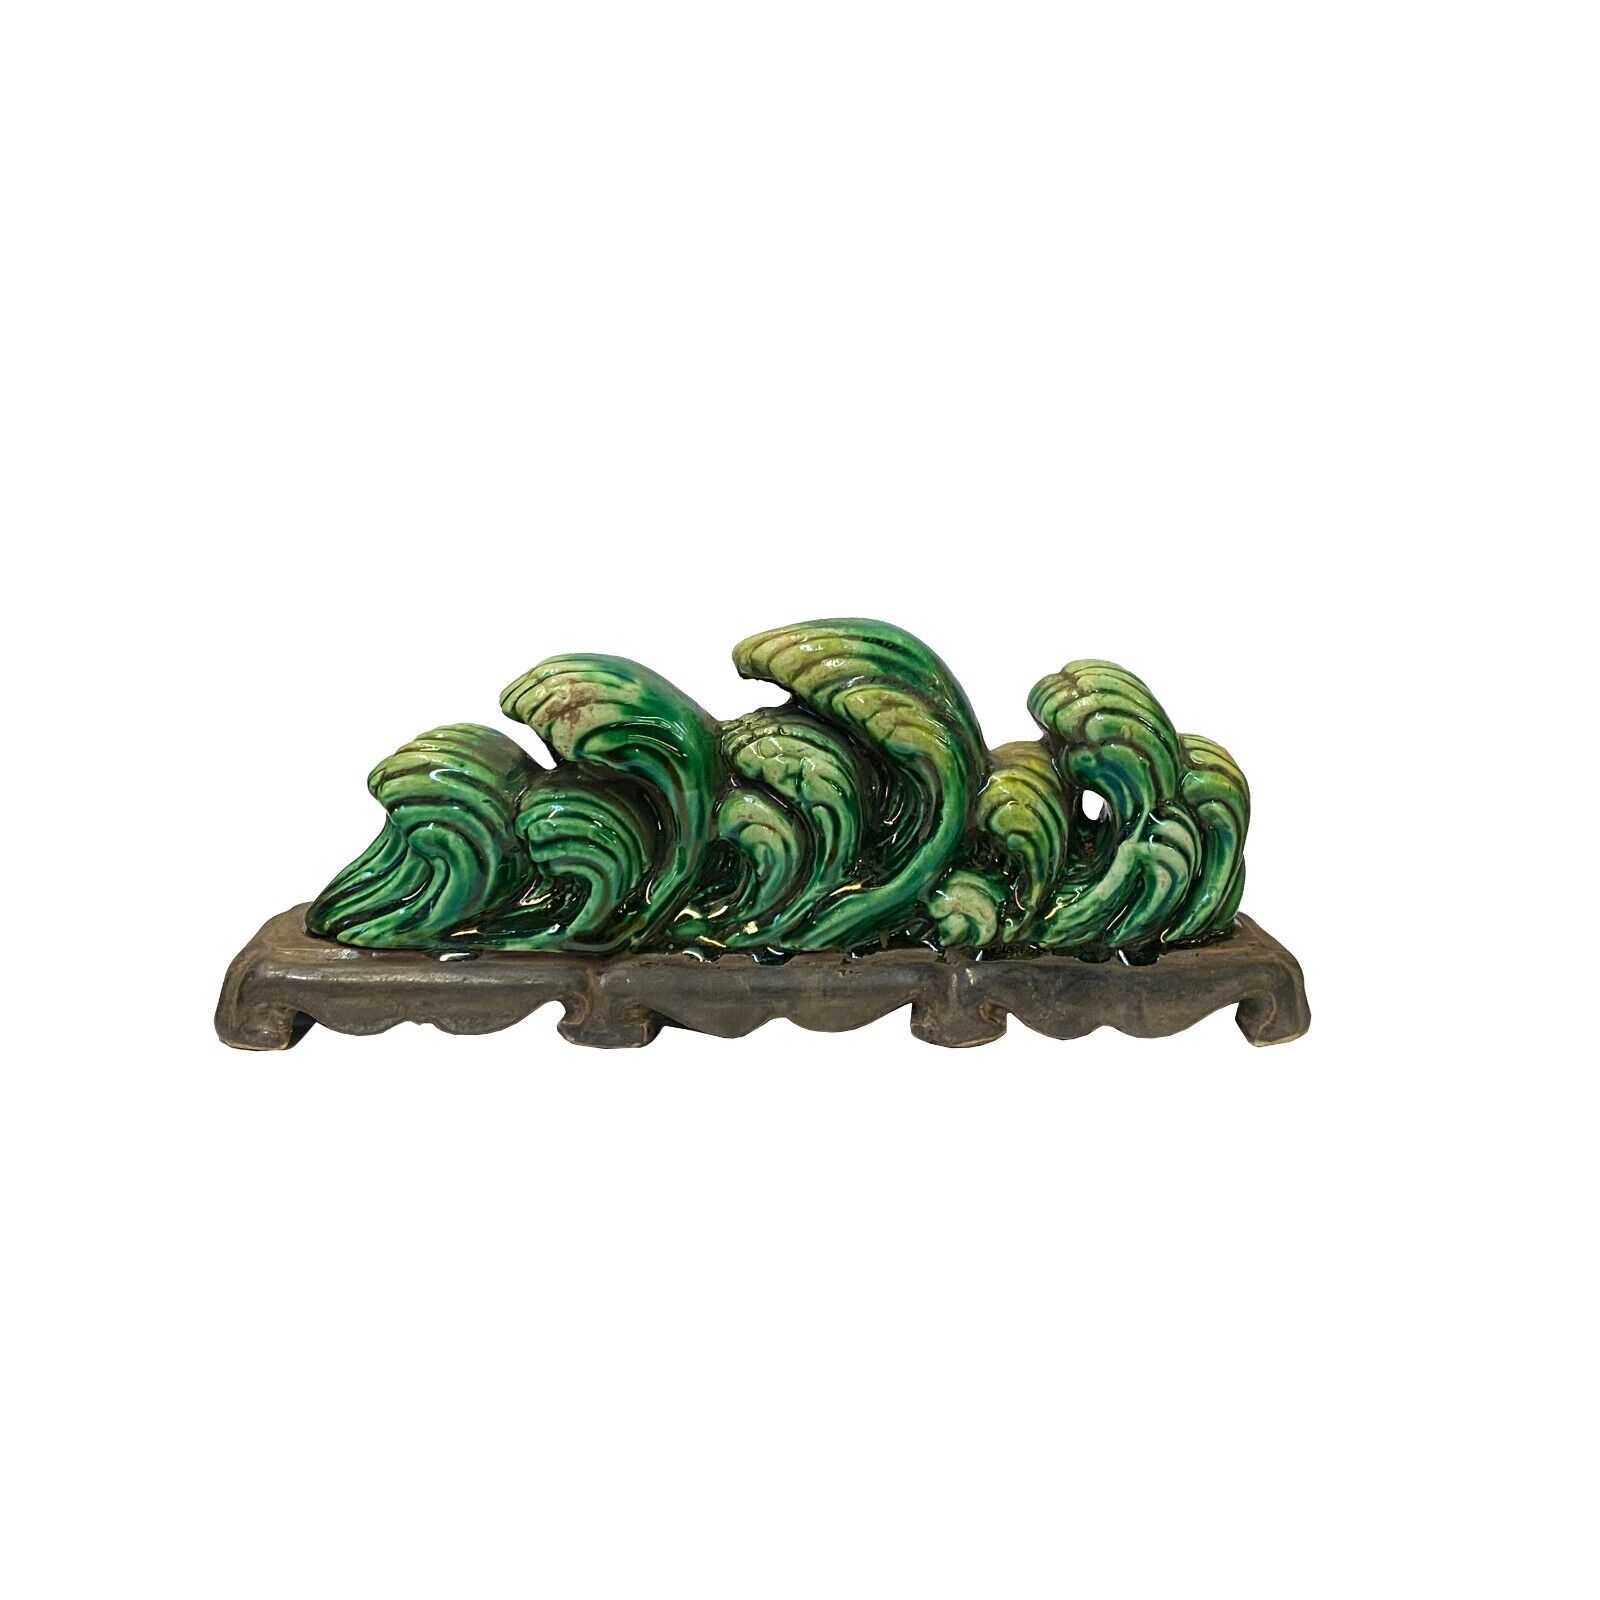 Pottery Ceramic Display Figure Green Glaze Wave Pattern Tabletop Art ws3194